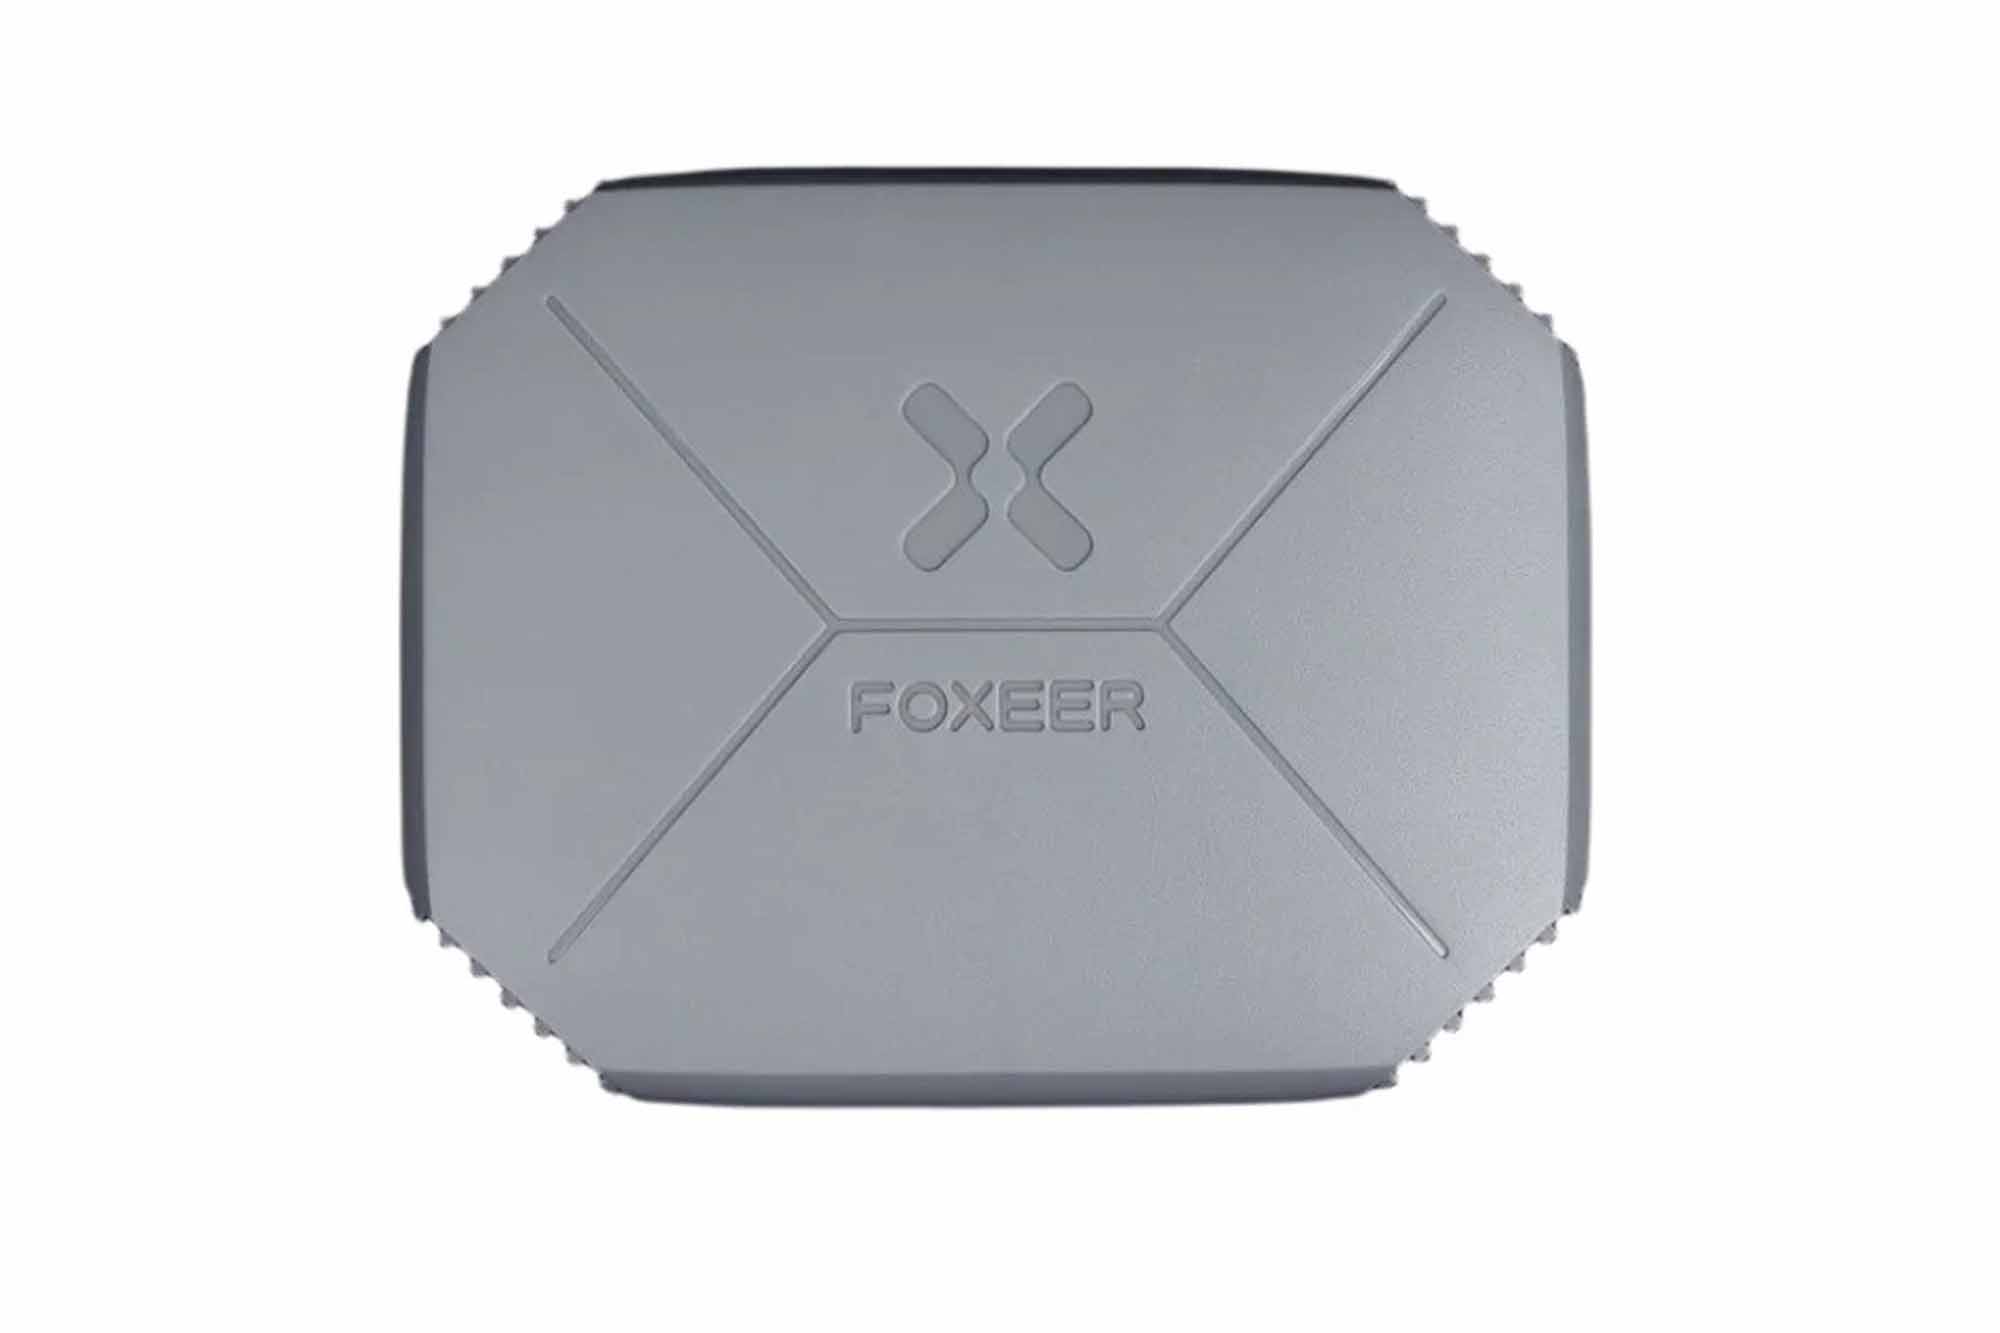 Foxeer Echo 2 Max 13dBi 5.8G/2.4G Dual Frequency High Gain Directional FPV Antenna